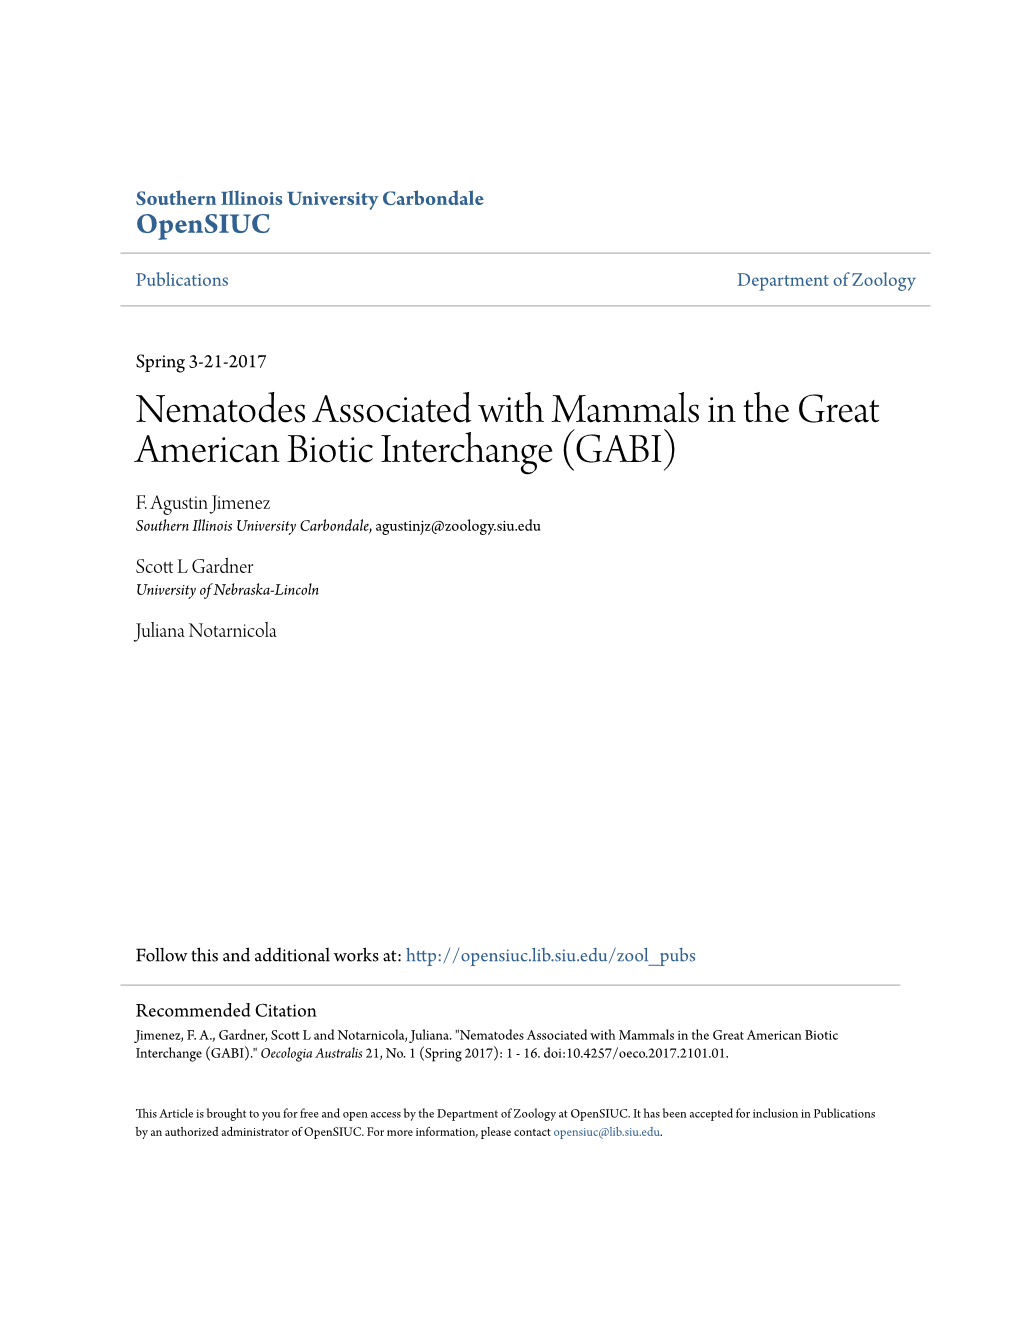 Nematodes Associated with Mammals in the Great American Biotic Interchange (GABI) F